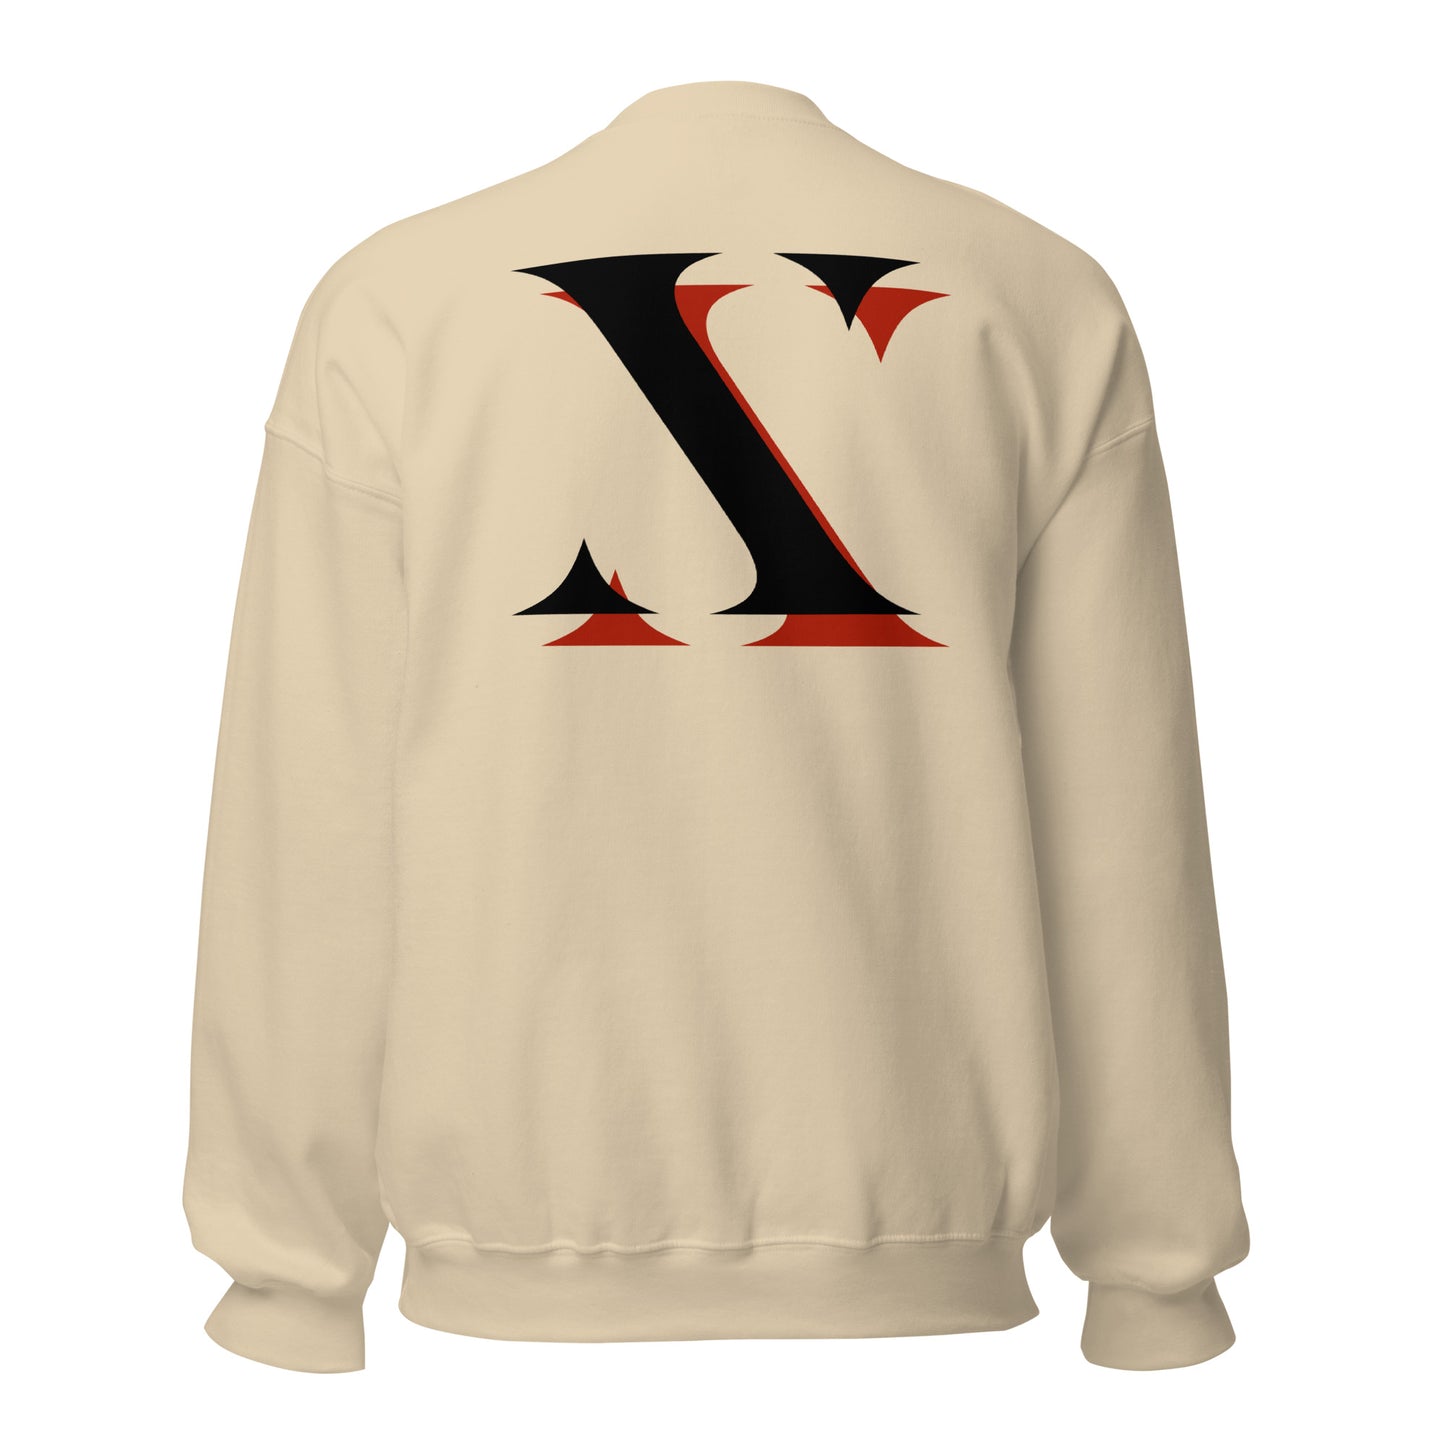 Black "X" Prxphecy Unisex Sweatshirt